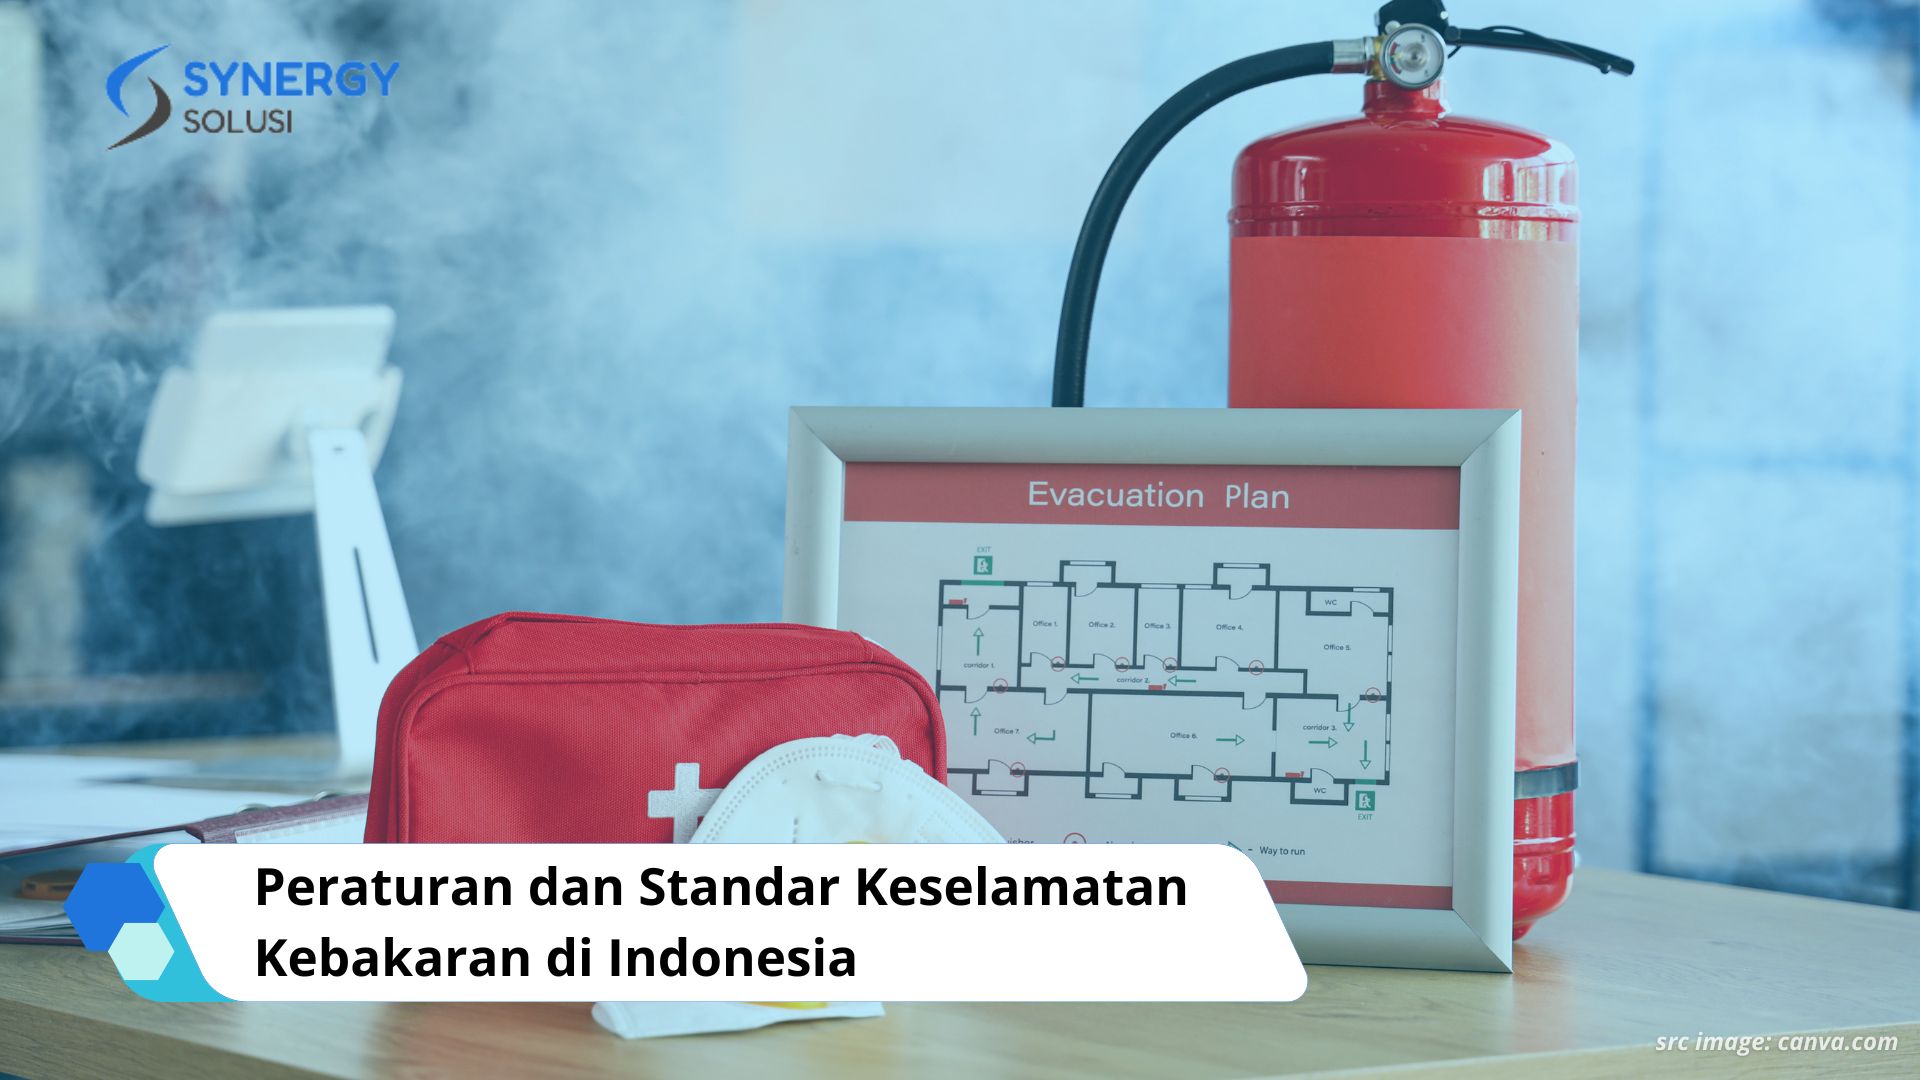 Peraturan dan Standar Keselamatan Kebakaran di Indonesia